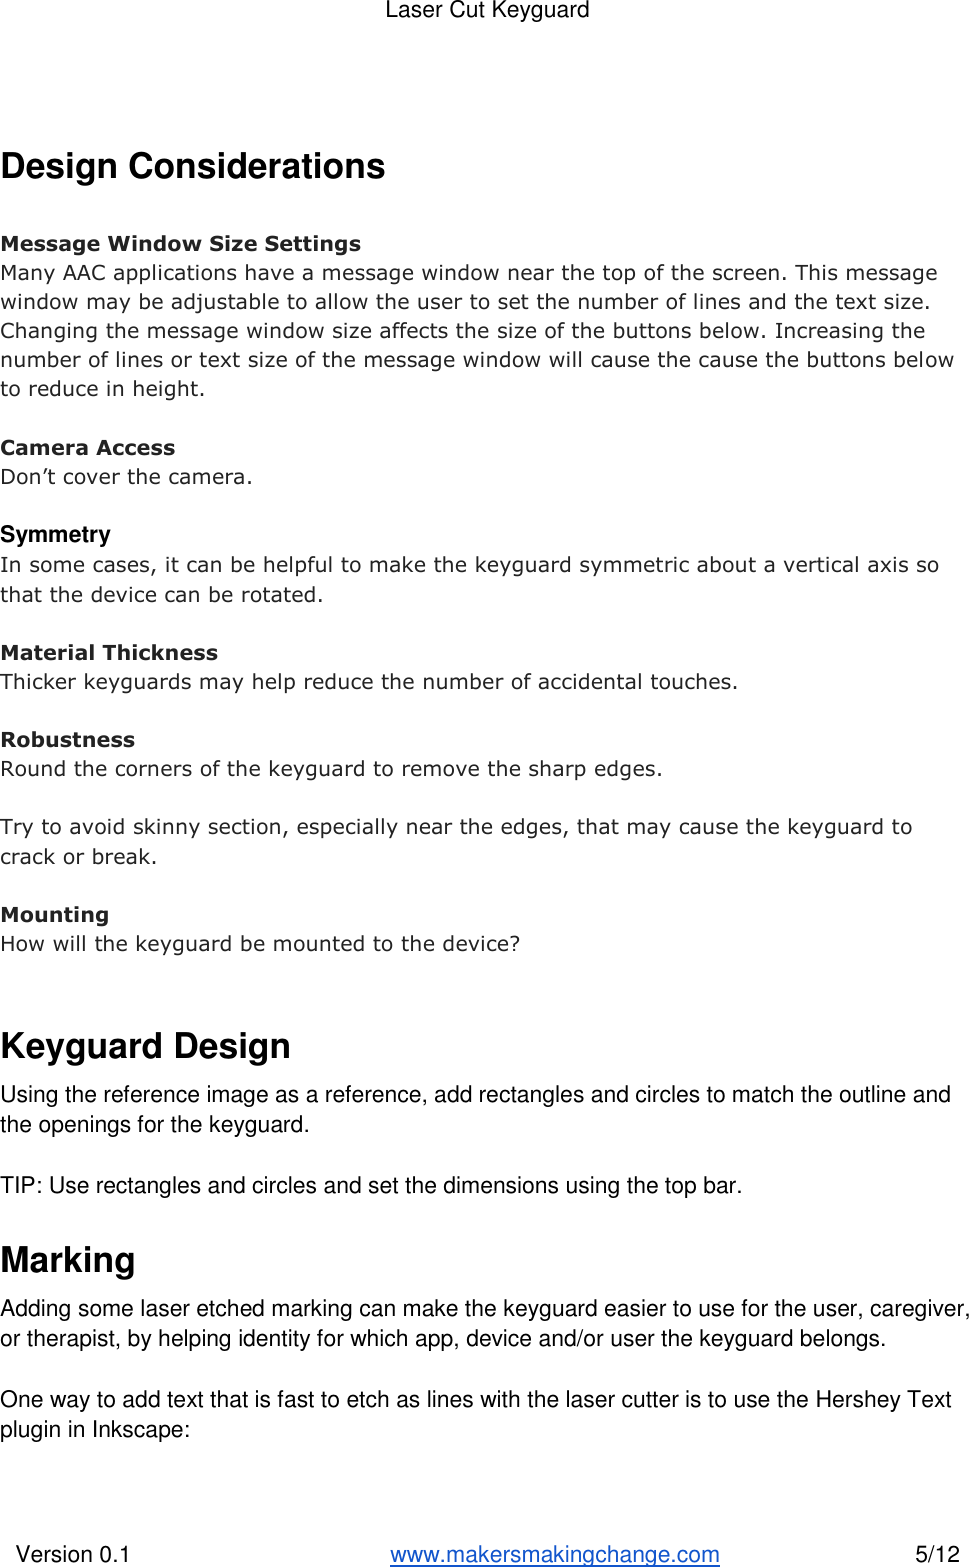 Page 5 of 12 - Lasercut Keyguard Instructions V0.1